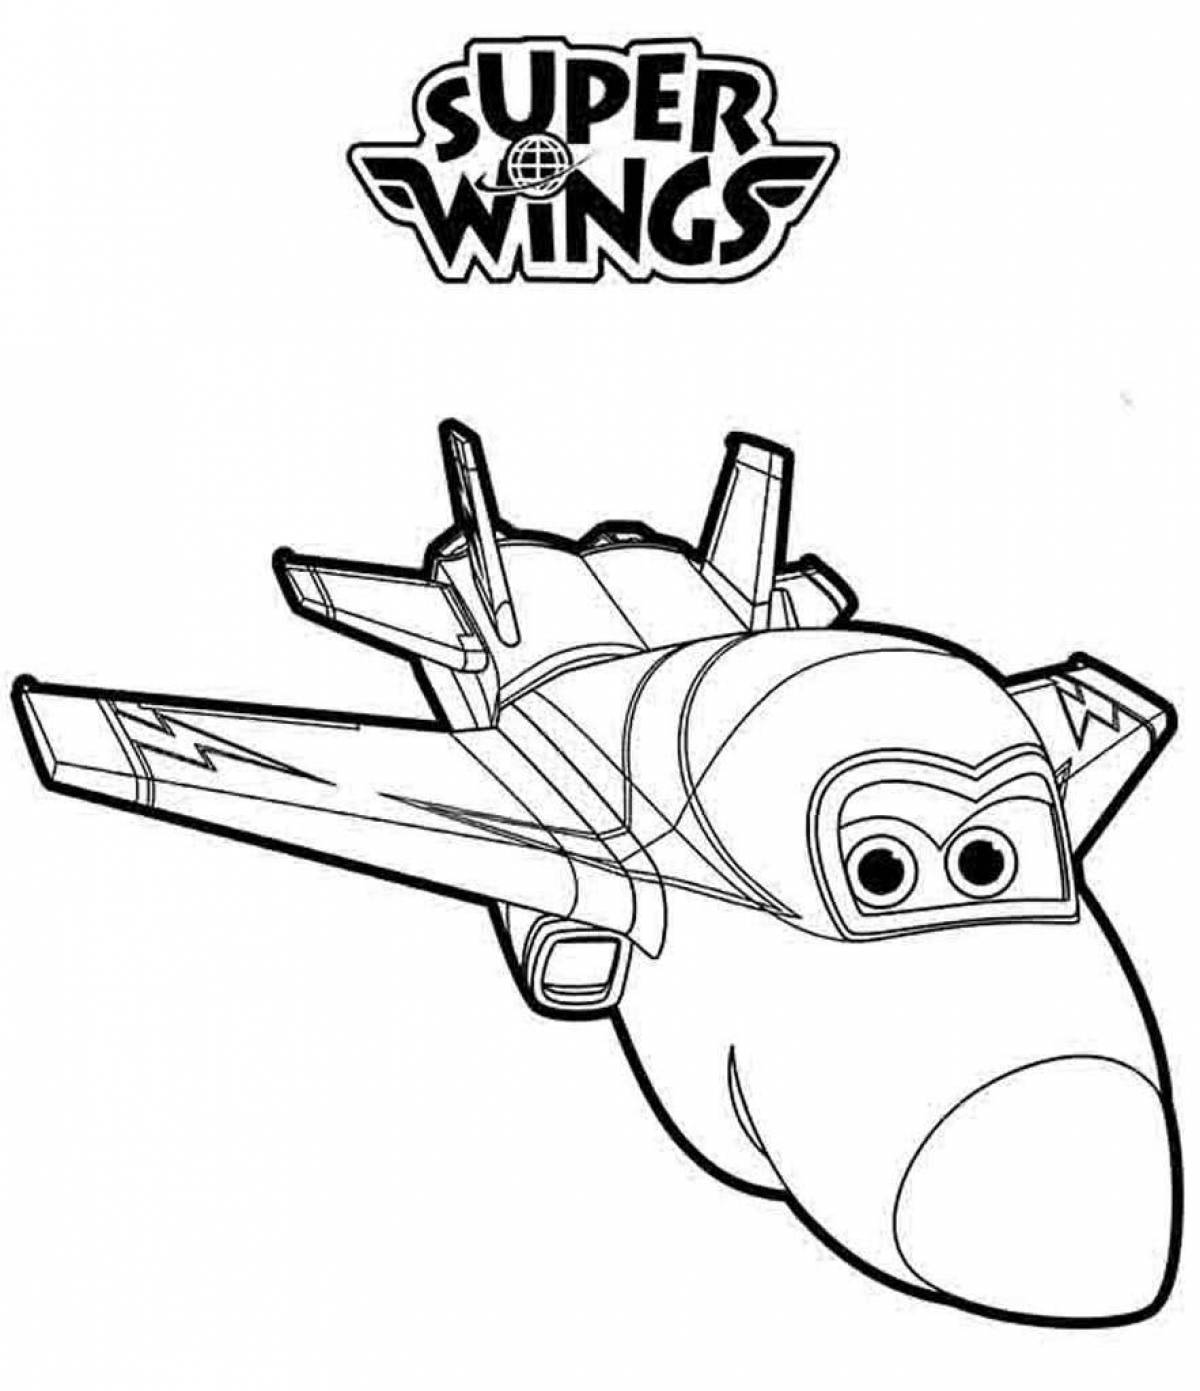 Incredible super wings coloring book for kids